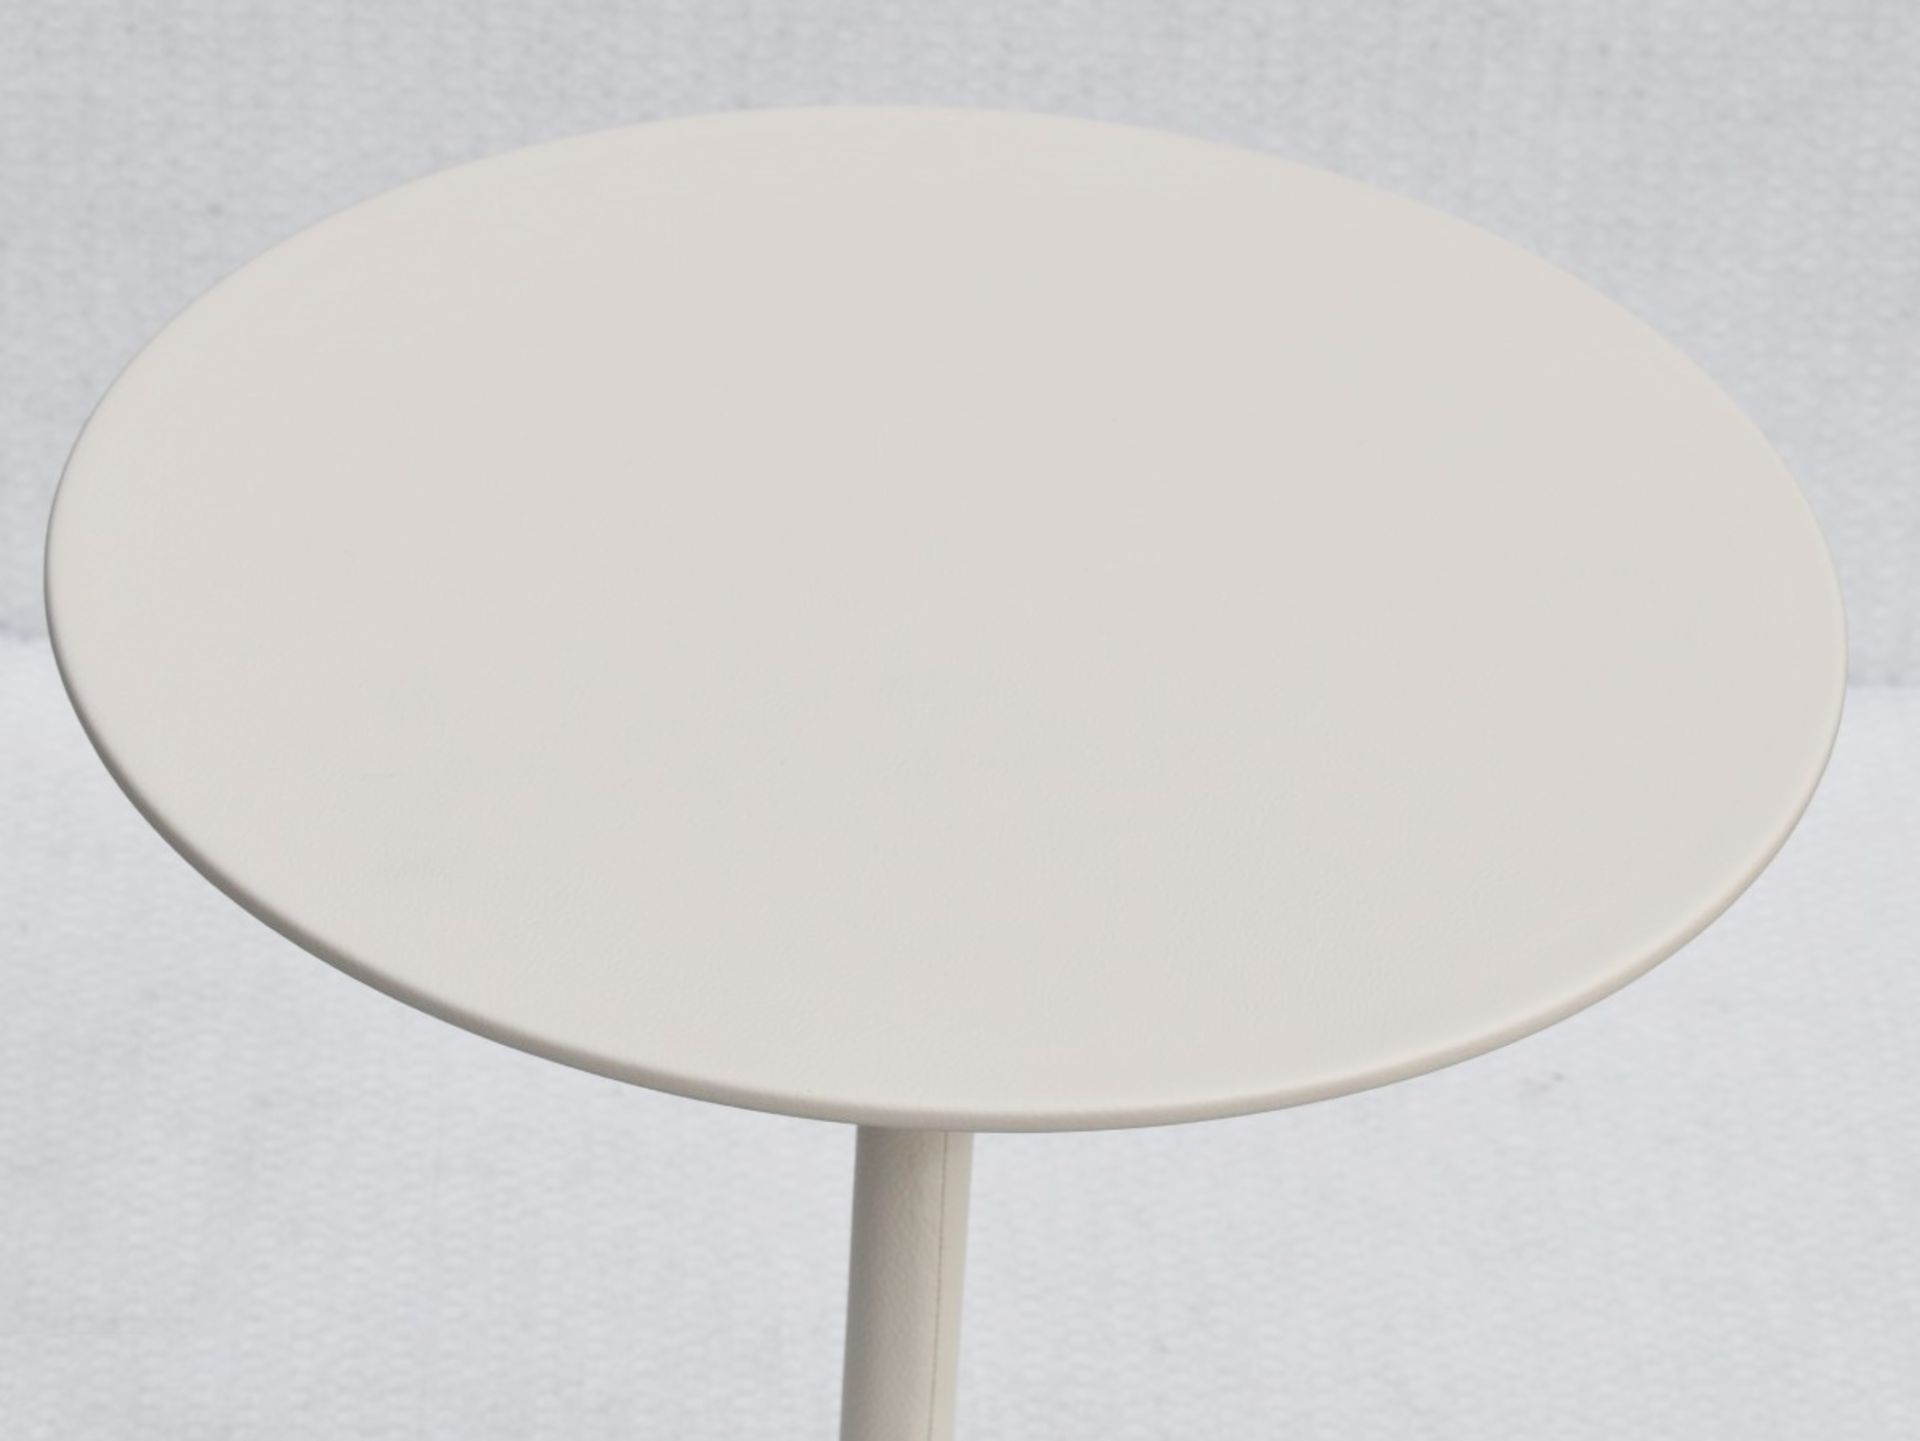 1 x POLTRONA FRAU 'Bob' Designer Leather Upholstered Coffee Table in Cream - Original Price £2,900 - Image 8 of 10